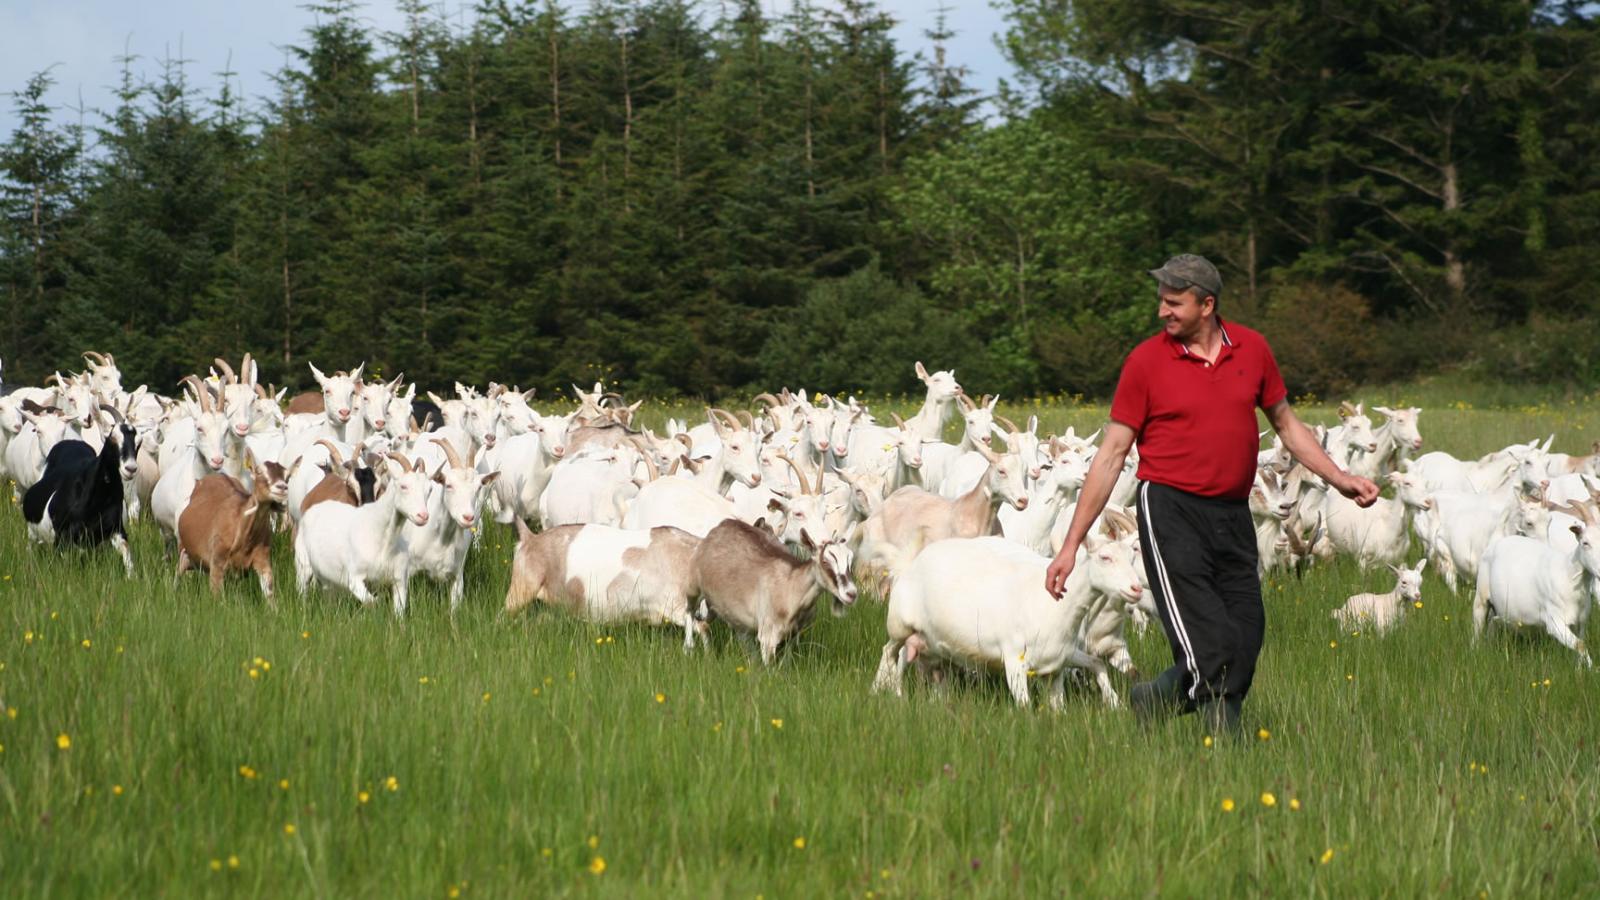 Petru leading the goats home